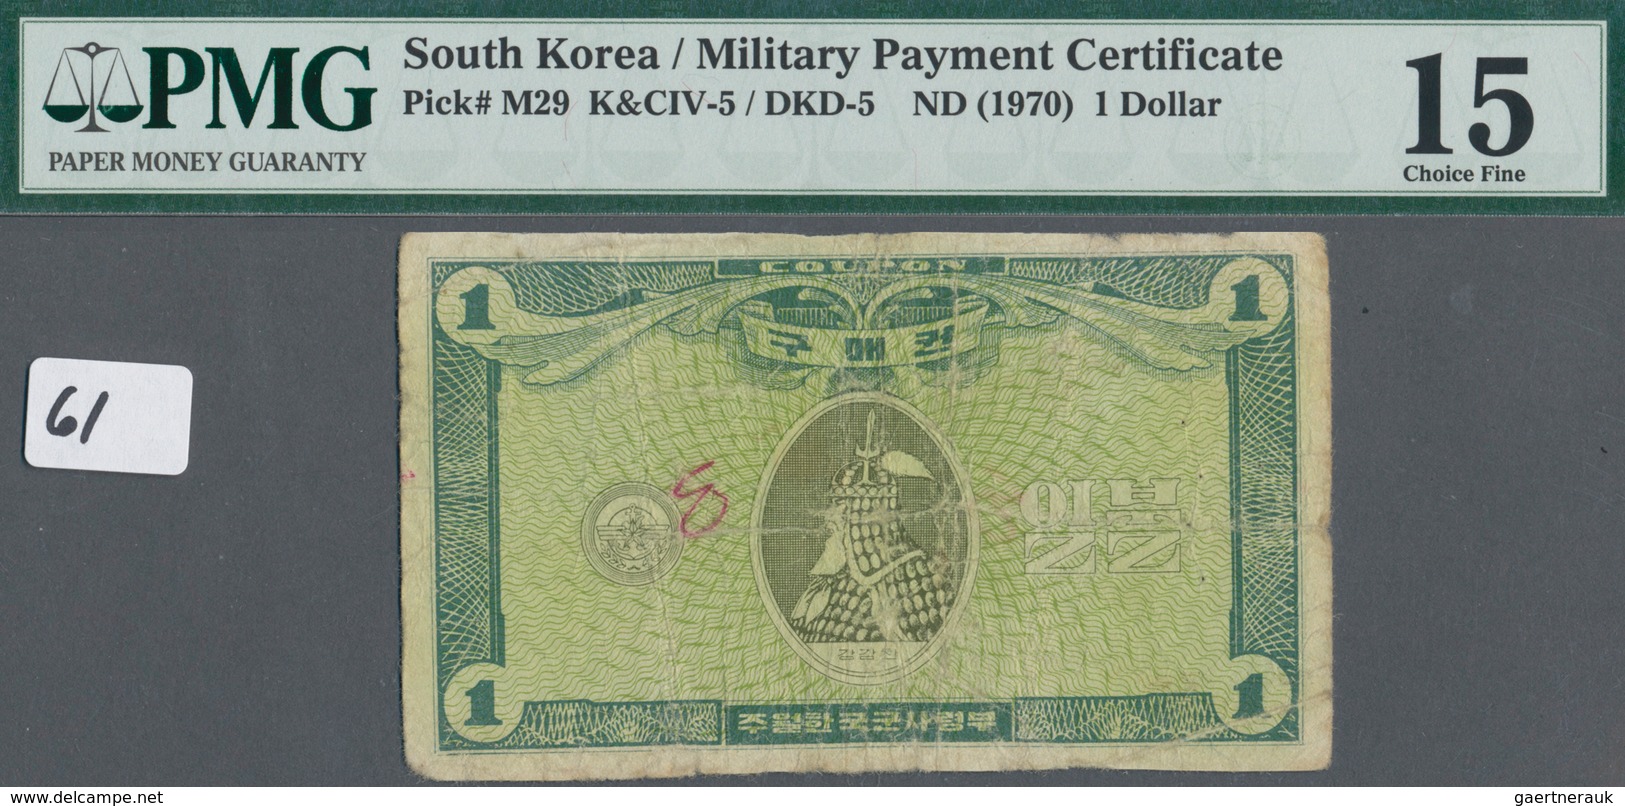 Vietnam: Lot With 7 Banknotes Including South Korea 1 Dollar MPC P.M29 (PMG 15), Thailand - Vietnam - Vietnam